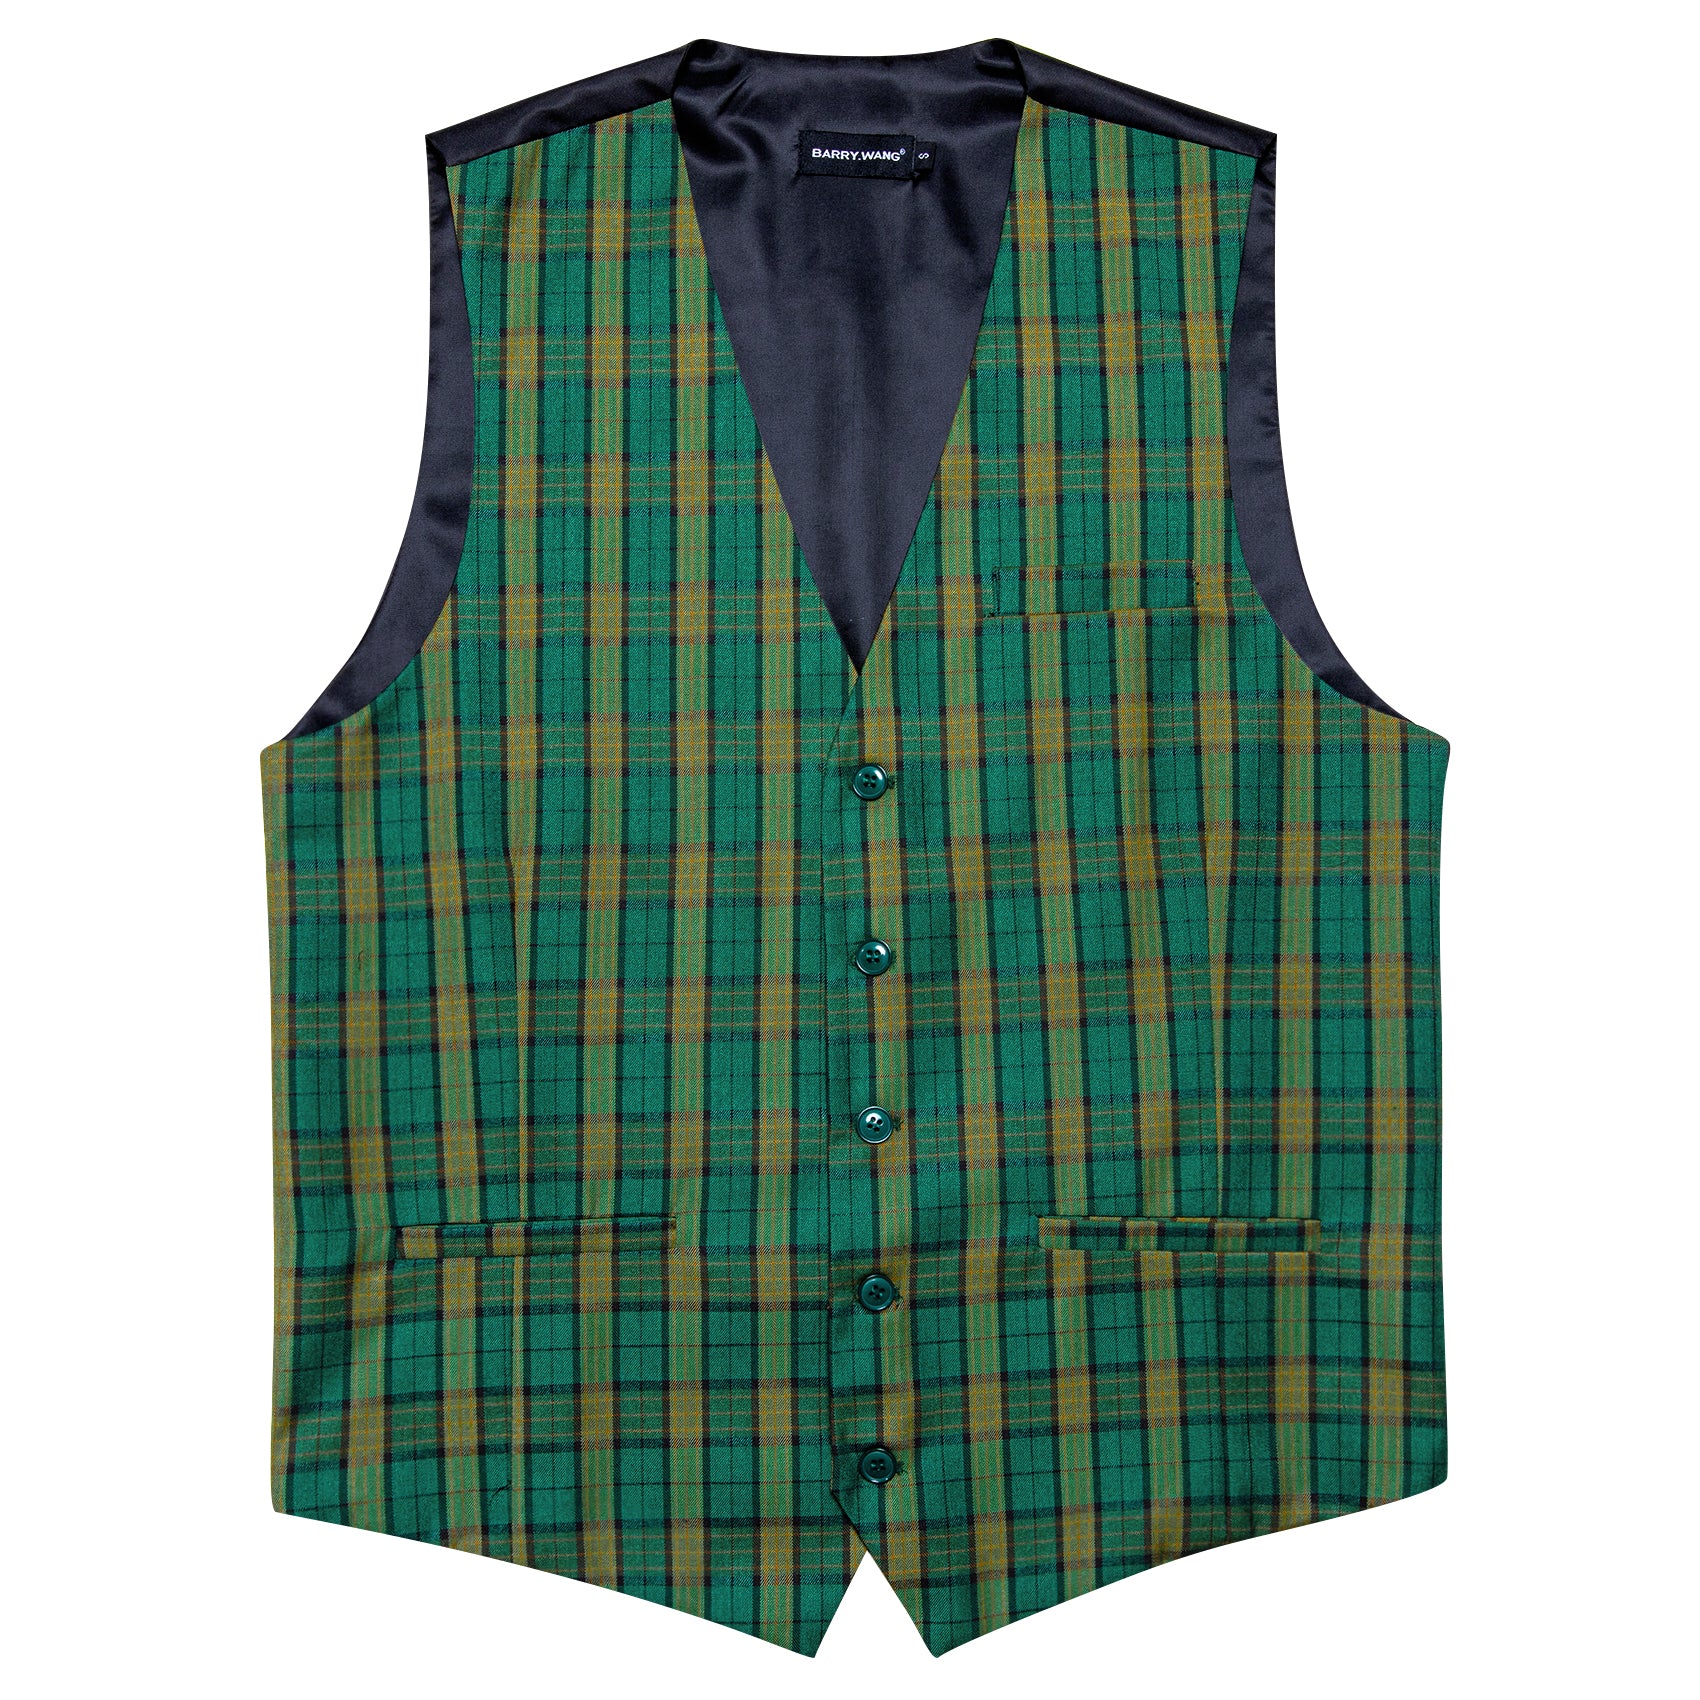 Barry.wang New Green Yellow Plaid Waistcoat Vest